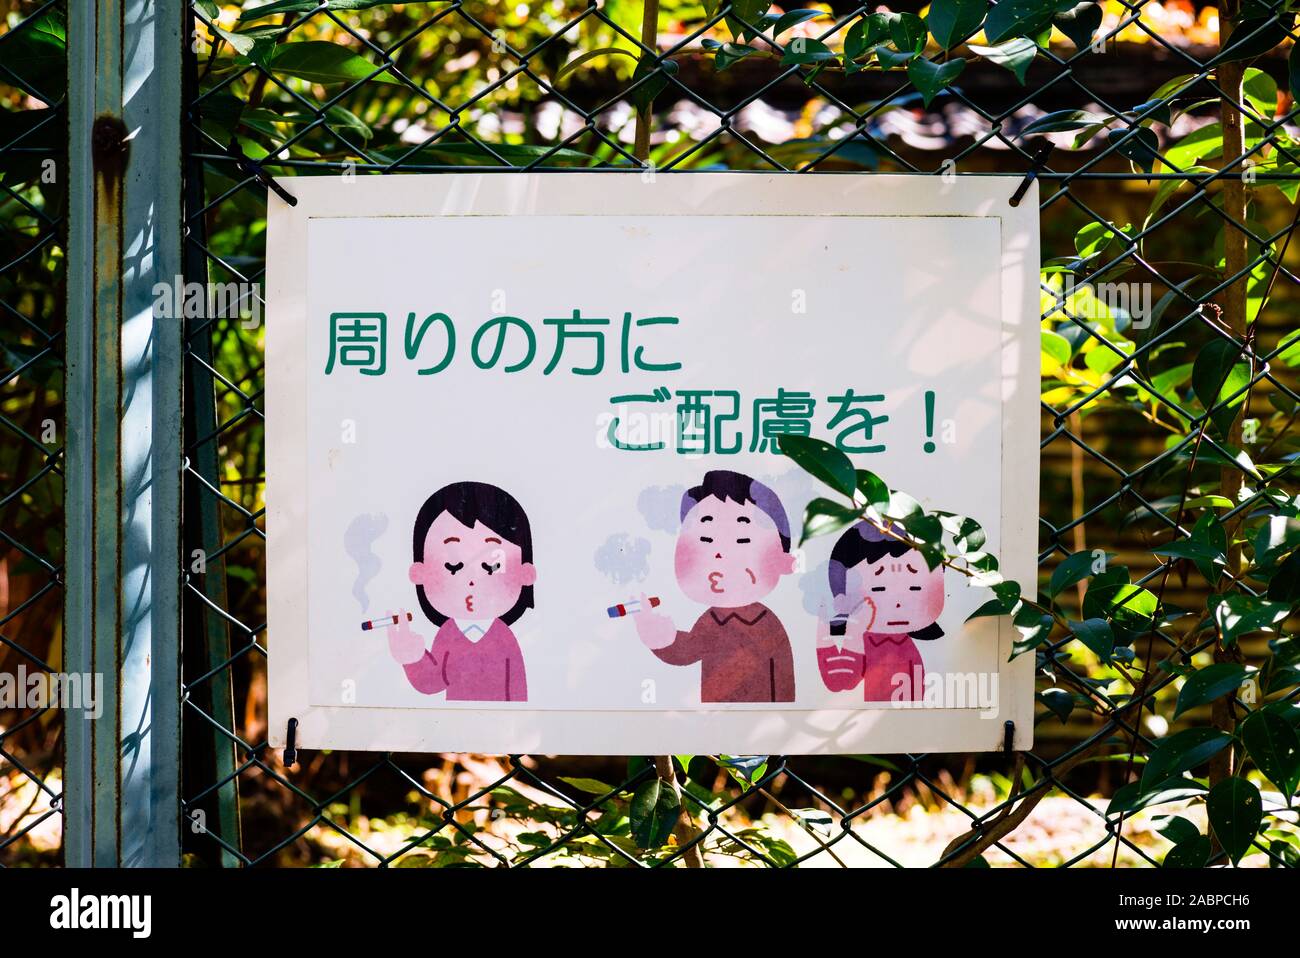 Signboard reminding smokers to respect non-smokers. Tokyo, Japan, November 2019 Stock Photo